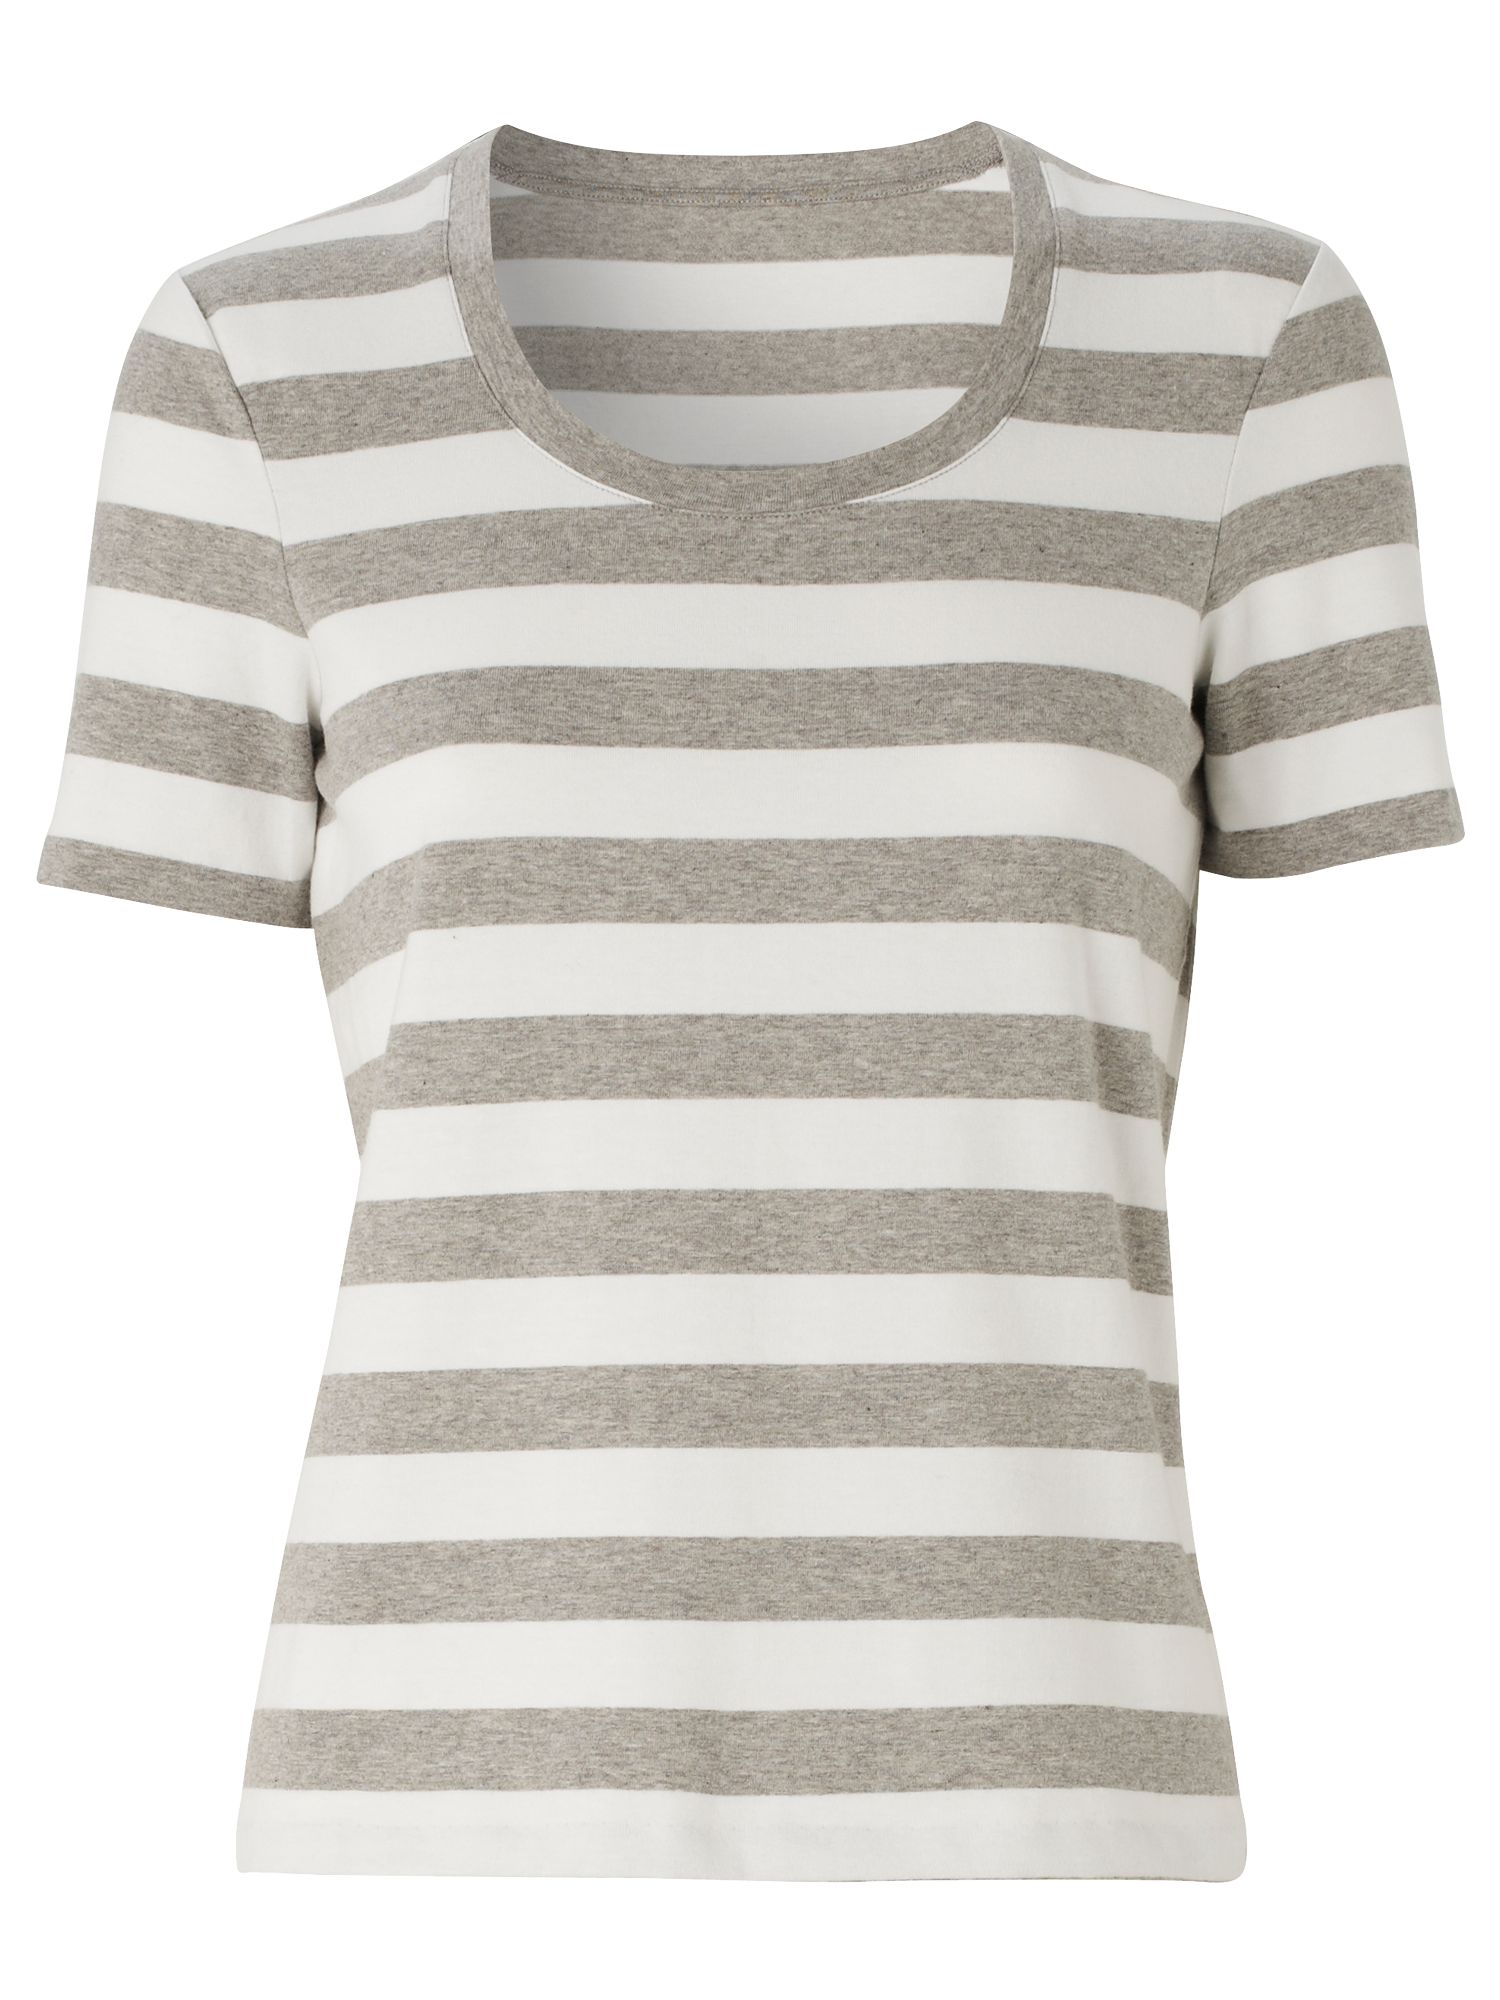 Cherre Stripe T-Shirt, Grey Marl White